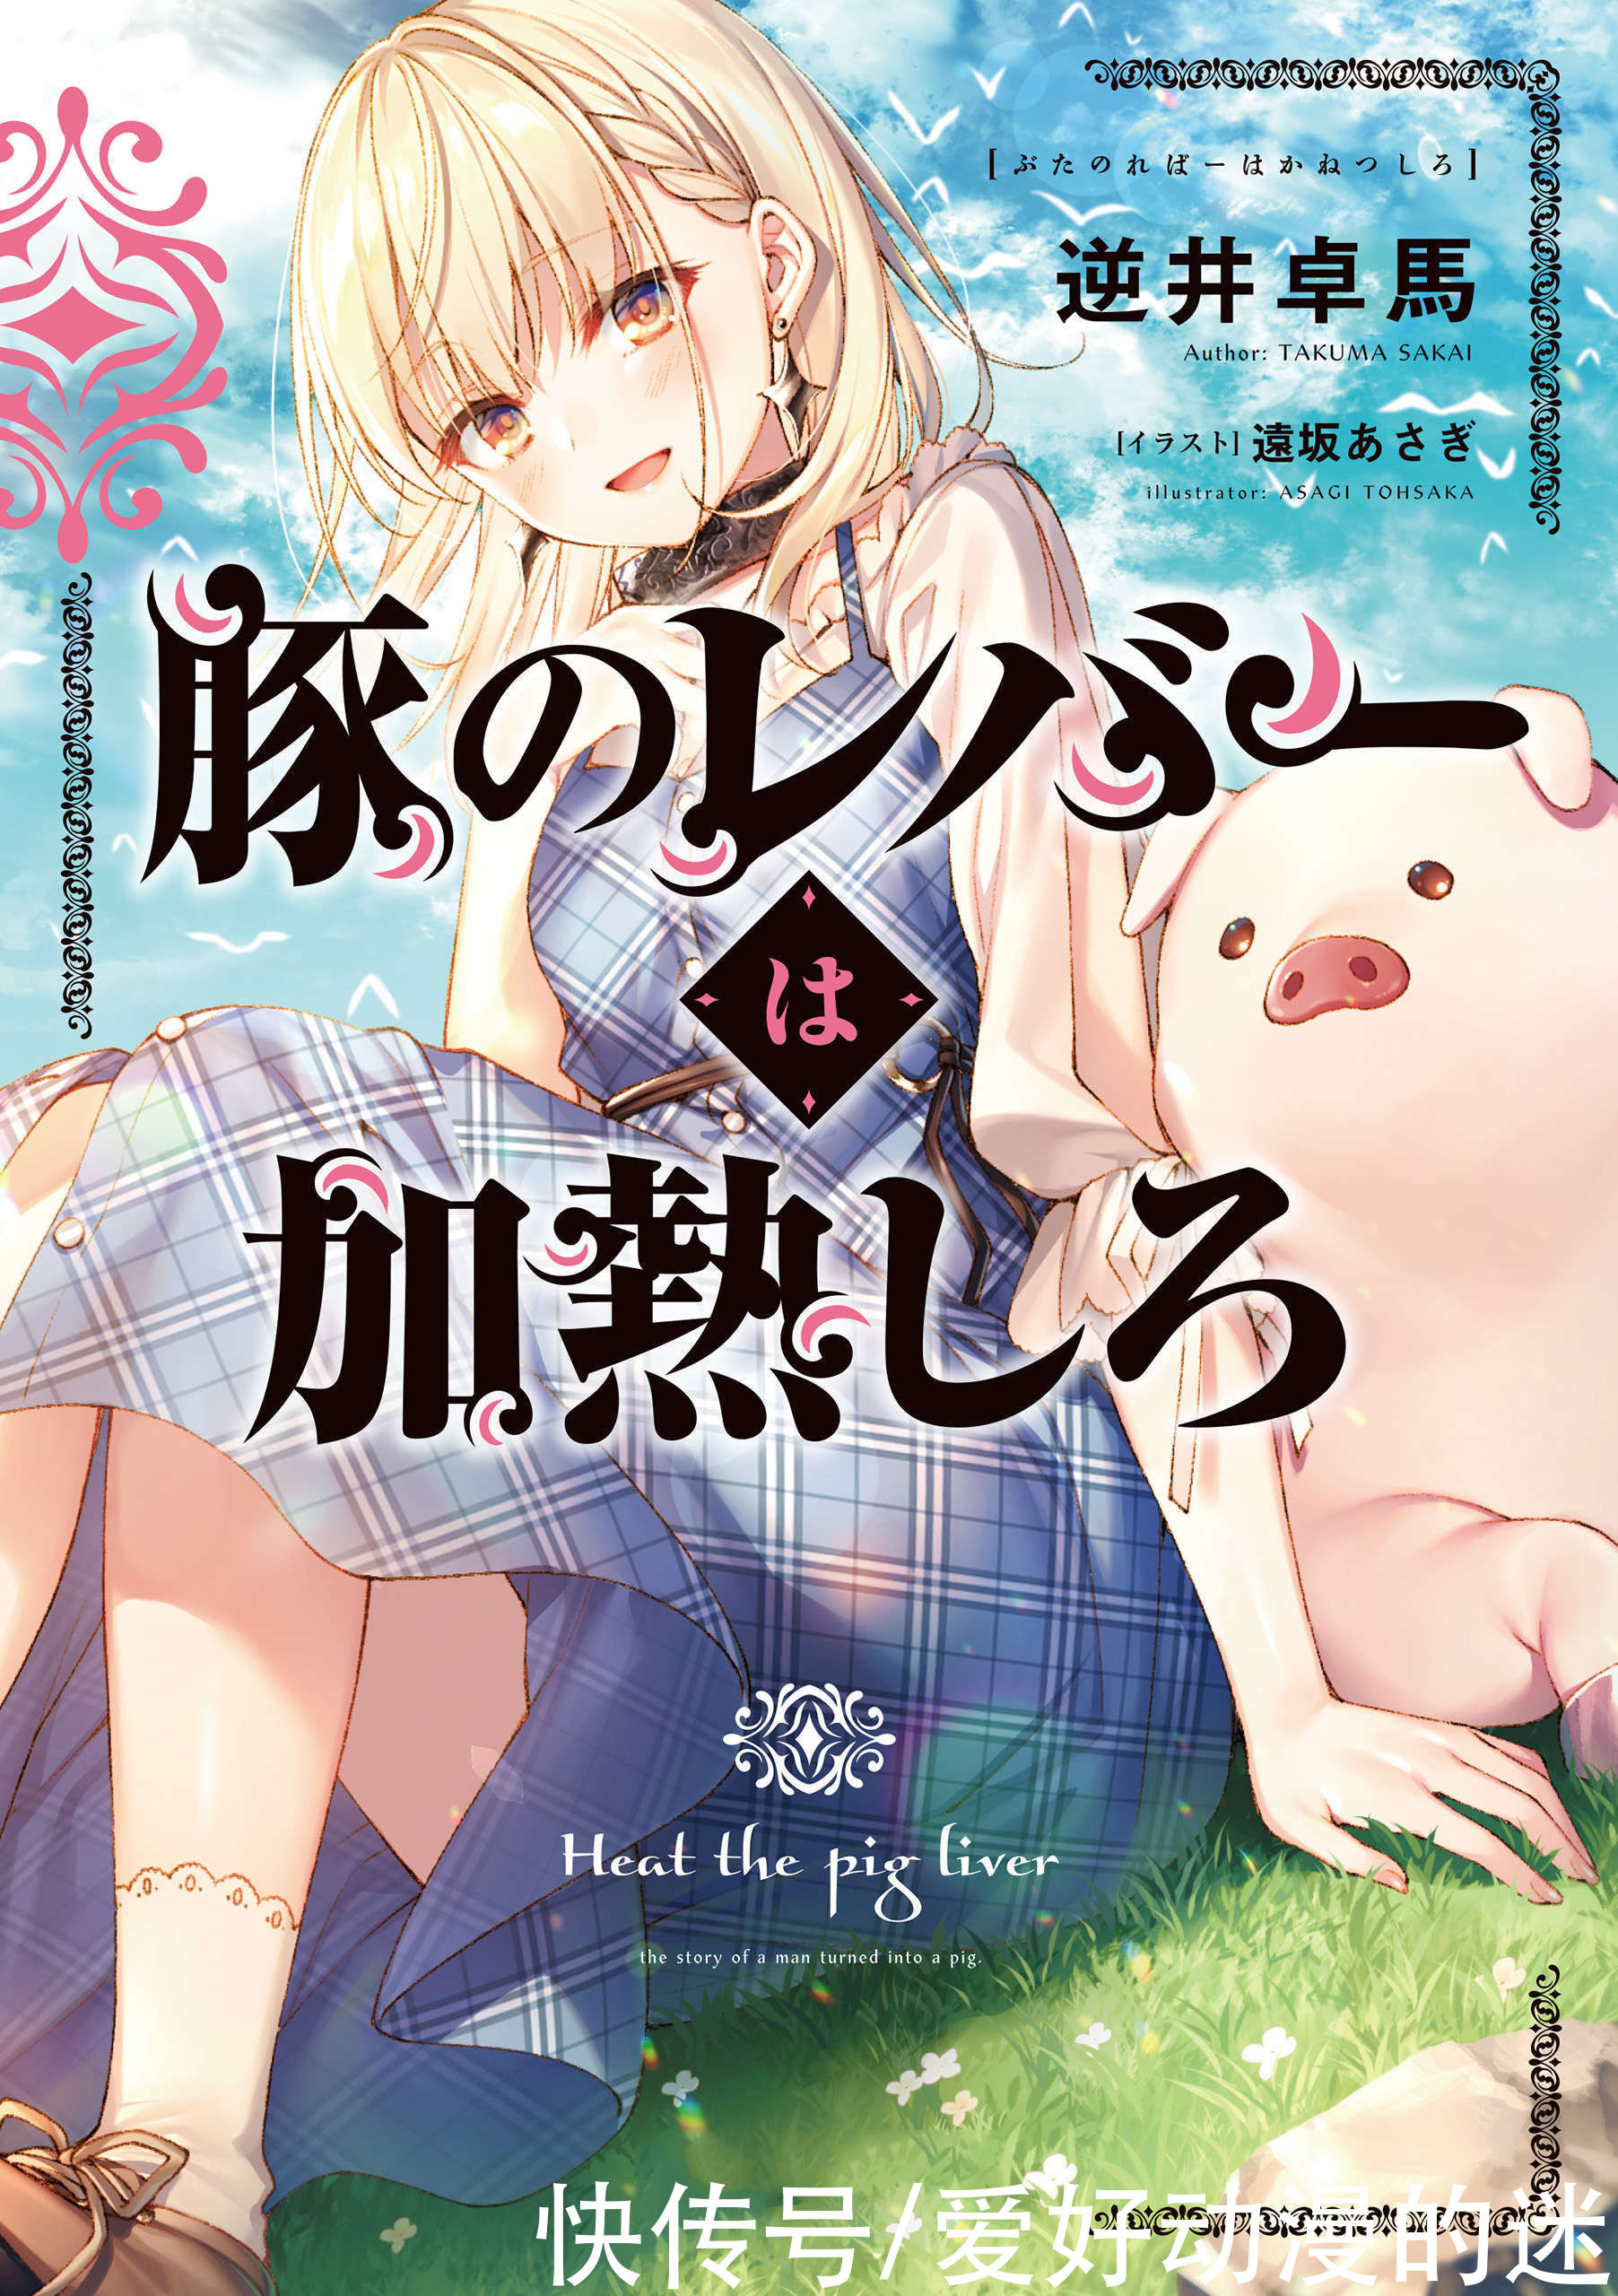 Heat the Pig Liver isekai light novels laves til TV anime serie